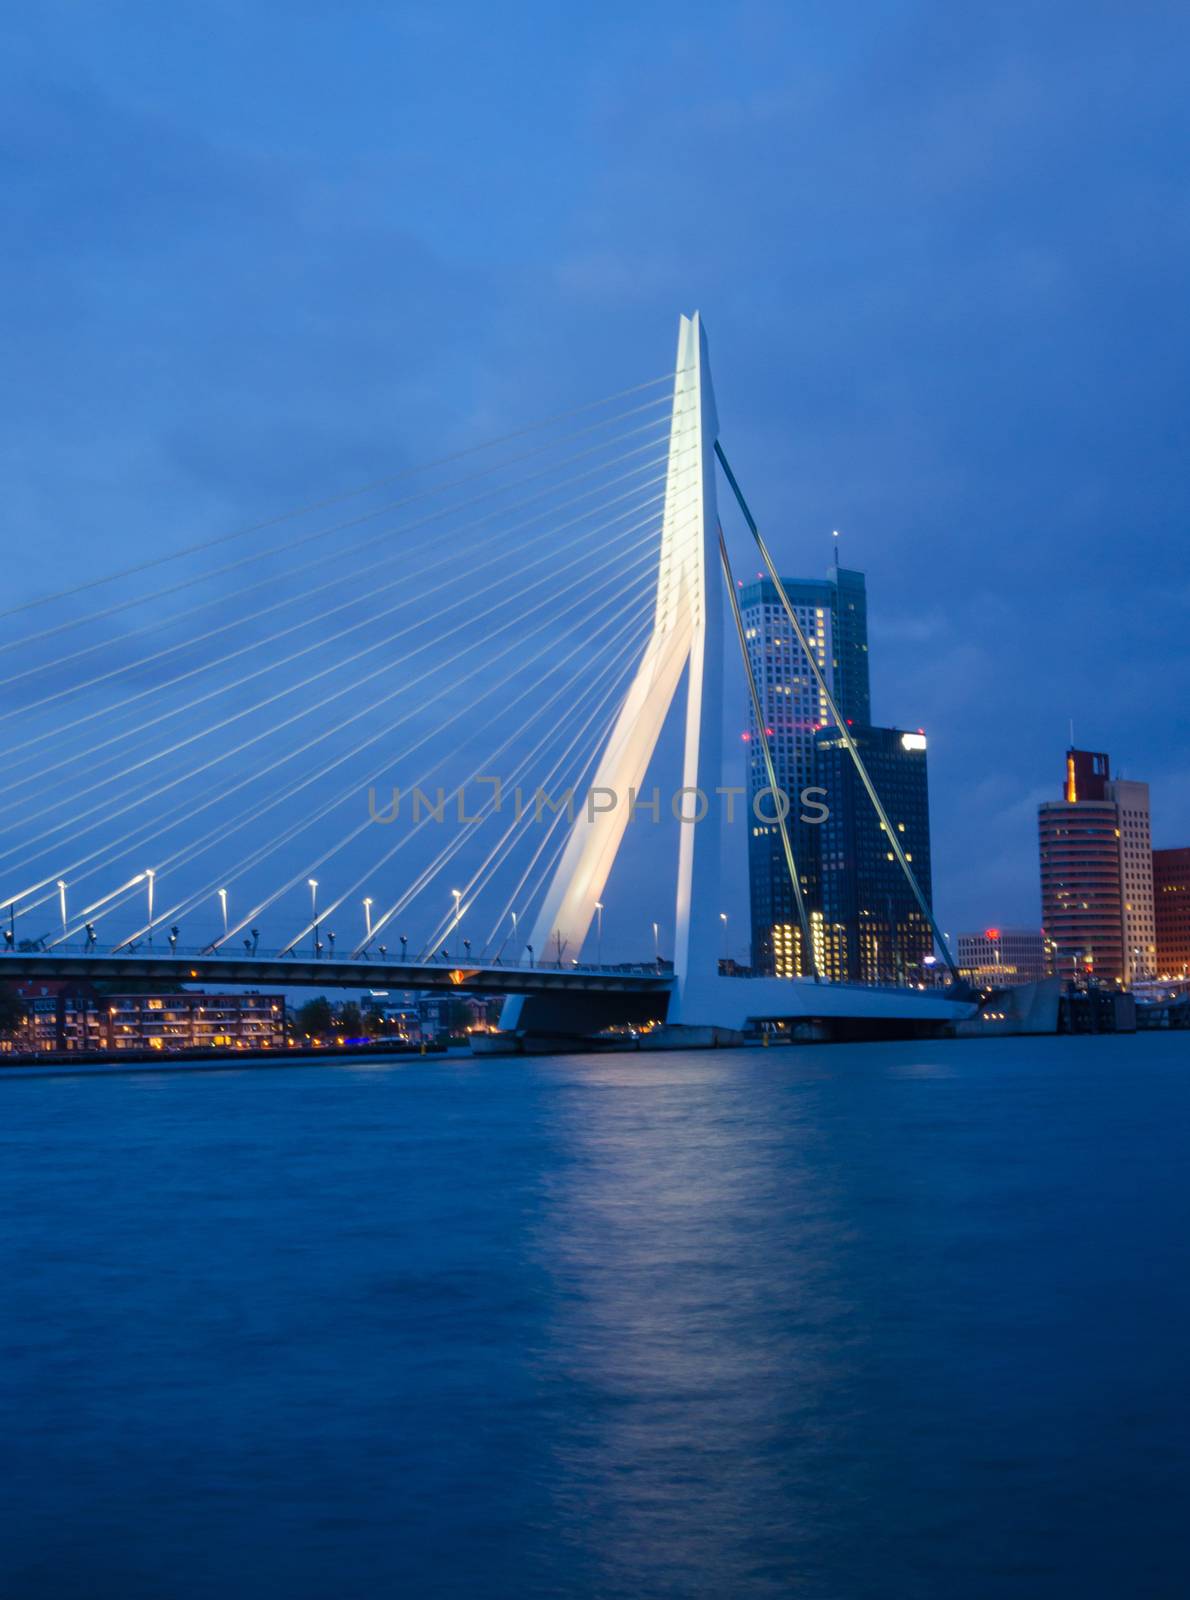 Twilight at Erasmus Bridge in Rotterdam by siraanamwong